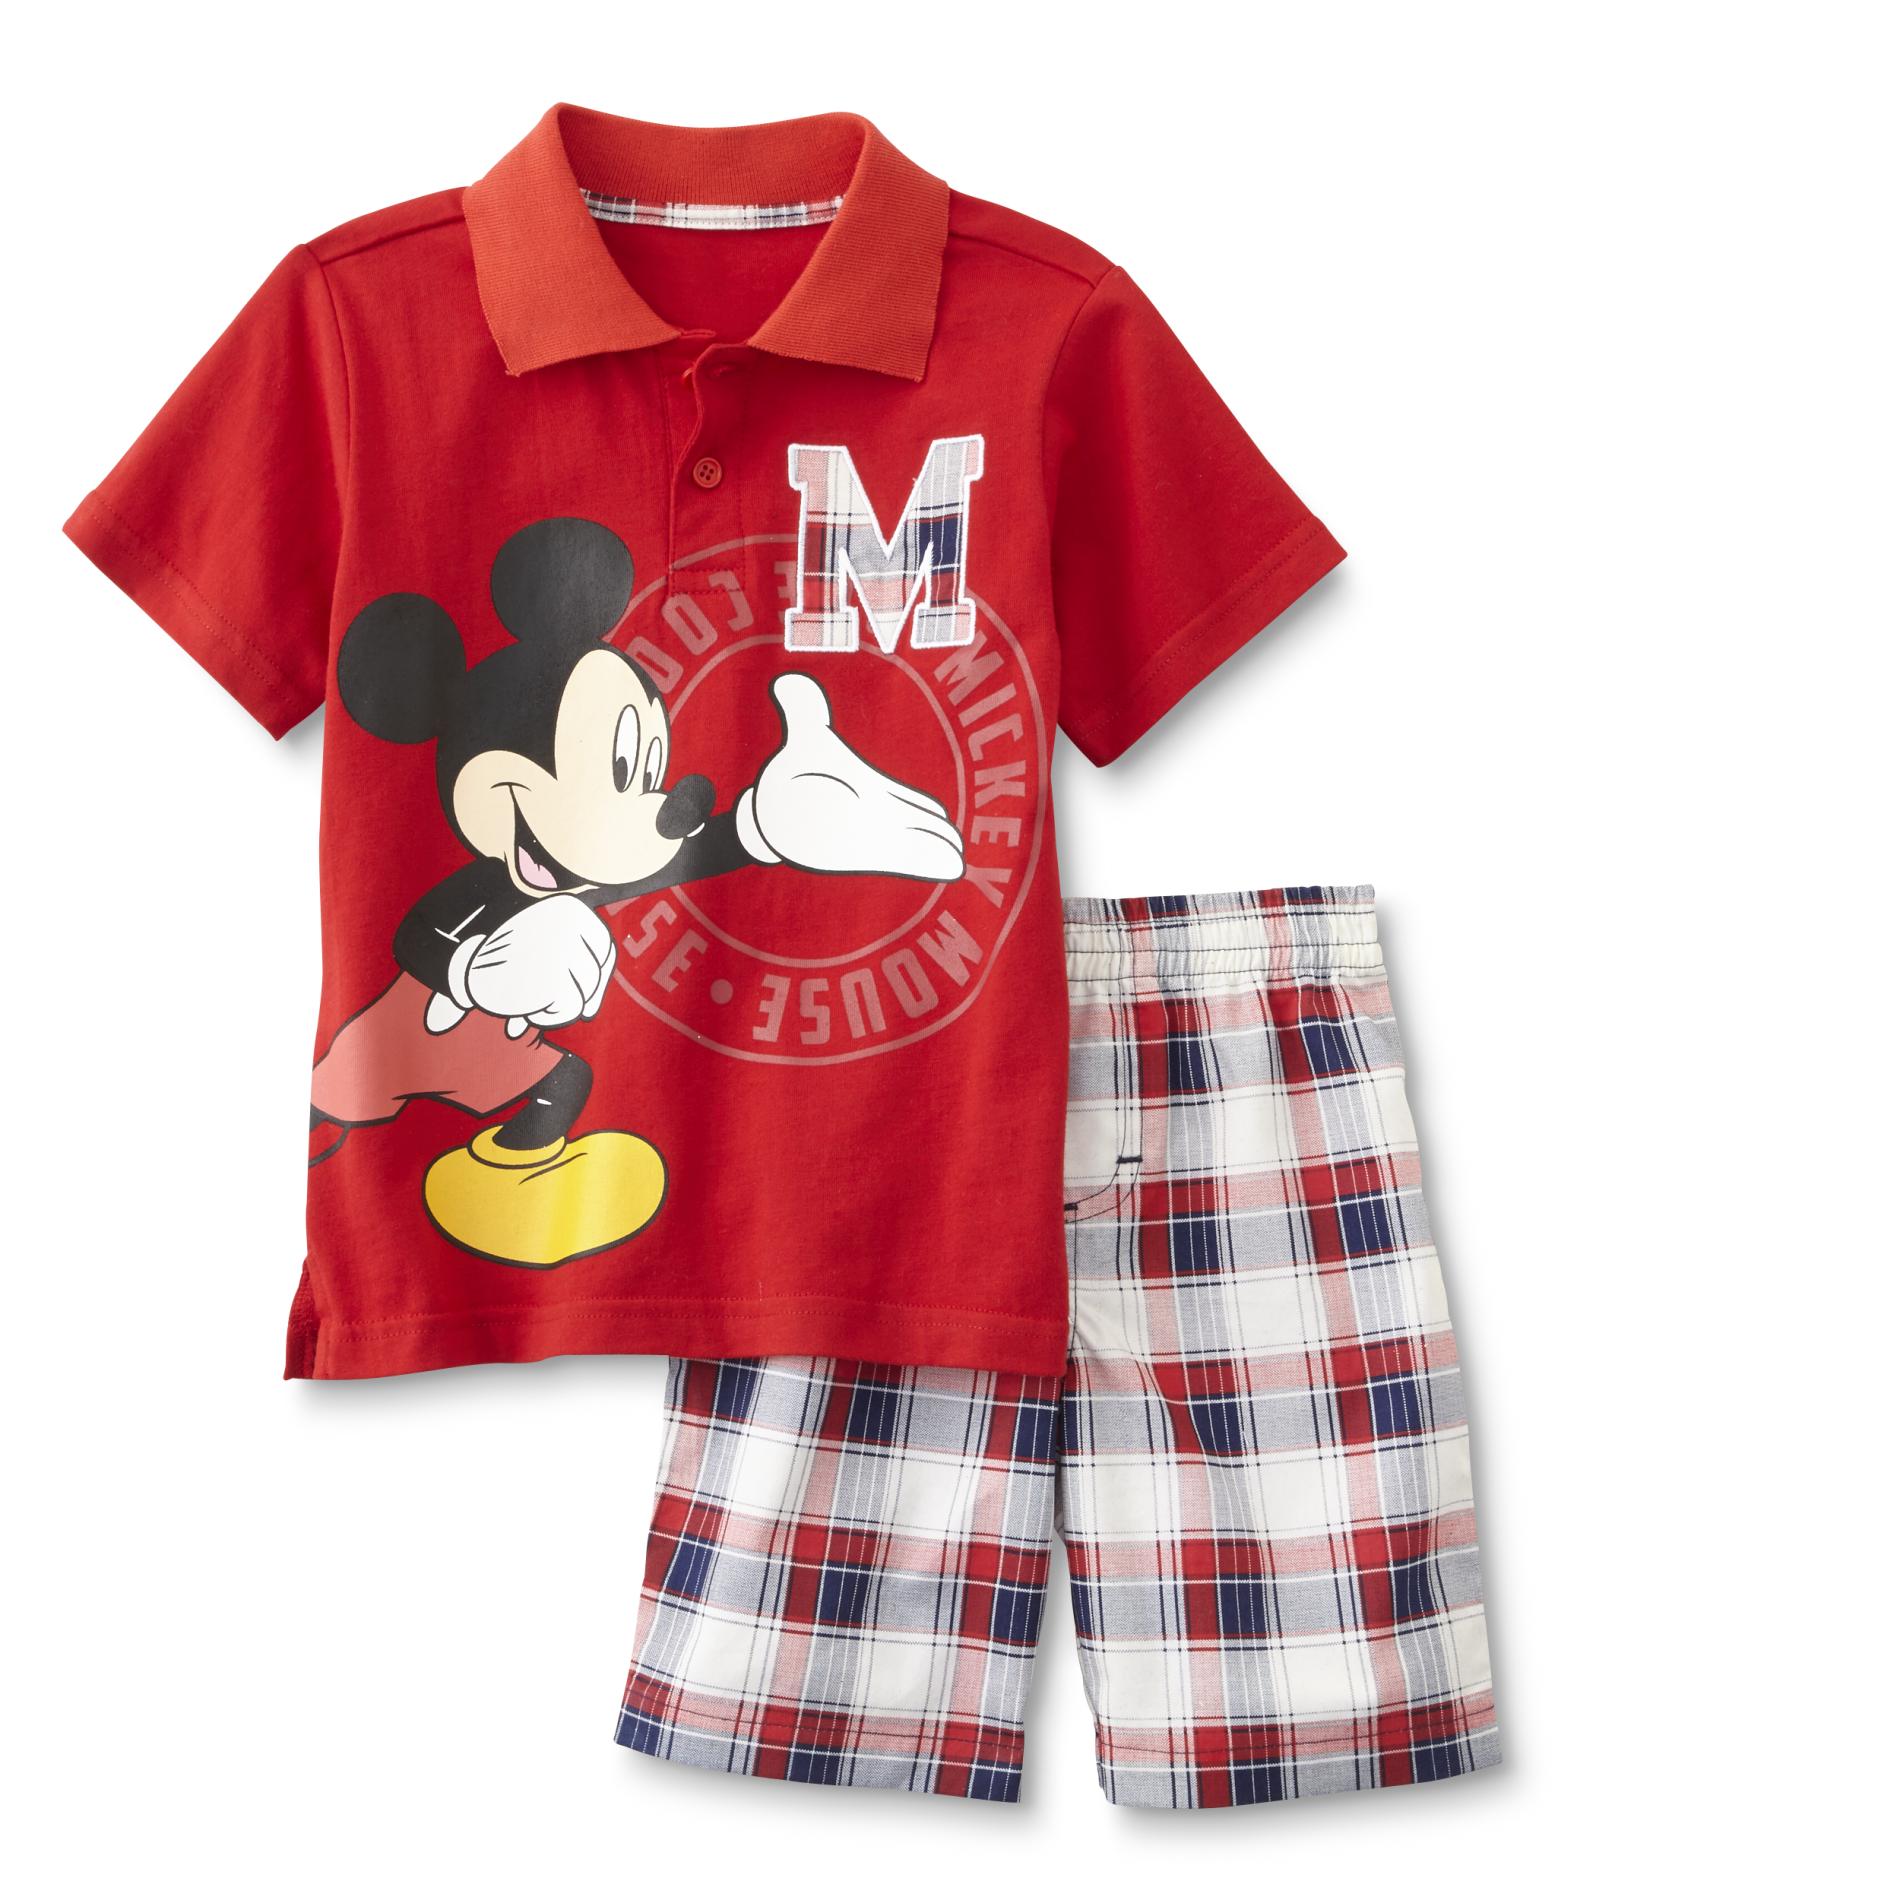 Disney Mickey Mouse Toddler Boy's Polo Shirt & Shorts - Plaid